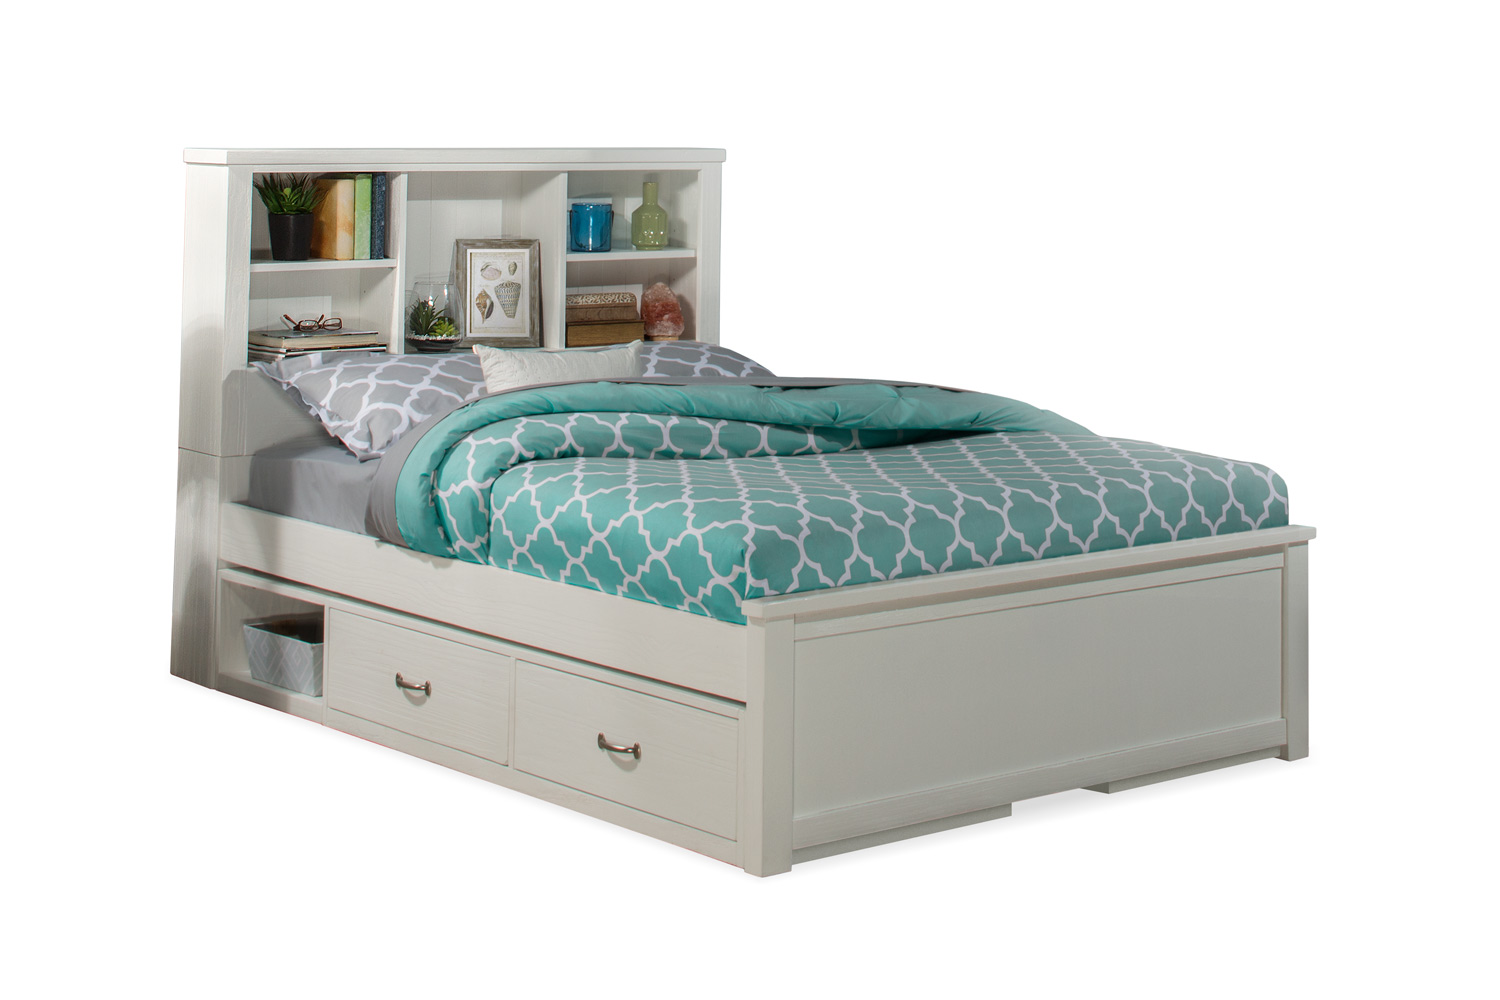 NE Kids Highlands Bookcase Bed with (2) Storage Units - White